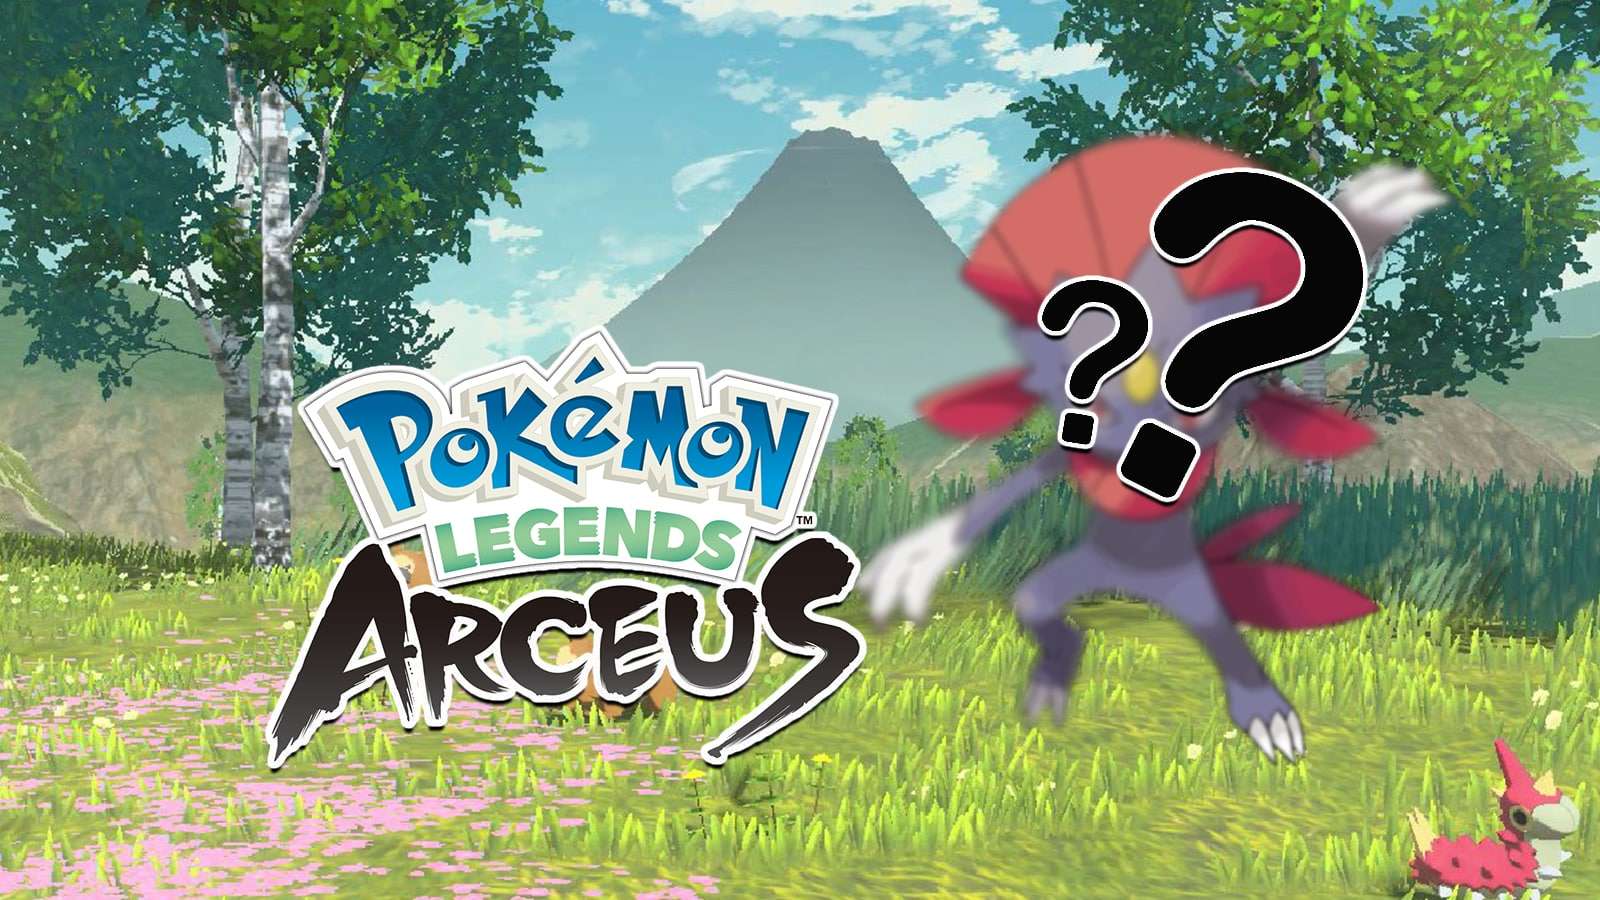 Pokemon Legends Arceus logo next to question marks